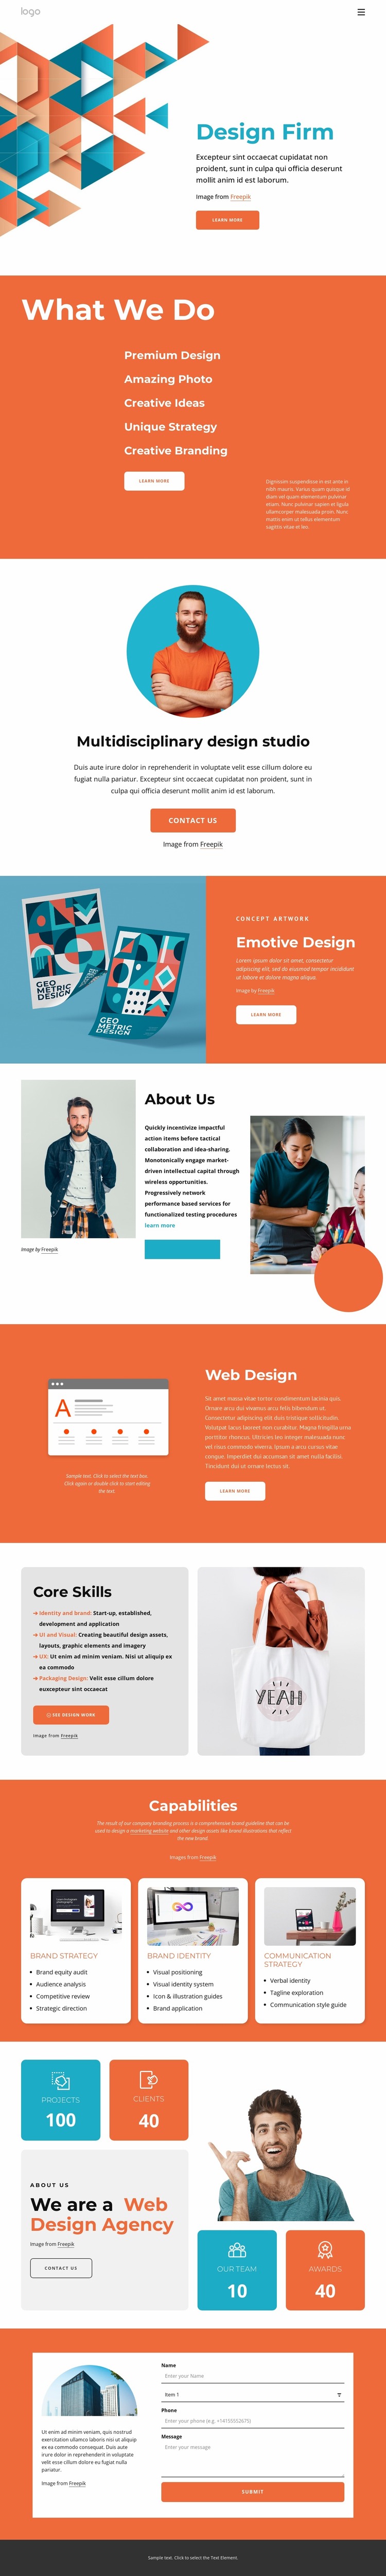 Creative ideas and great design Website Mockup